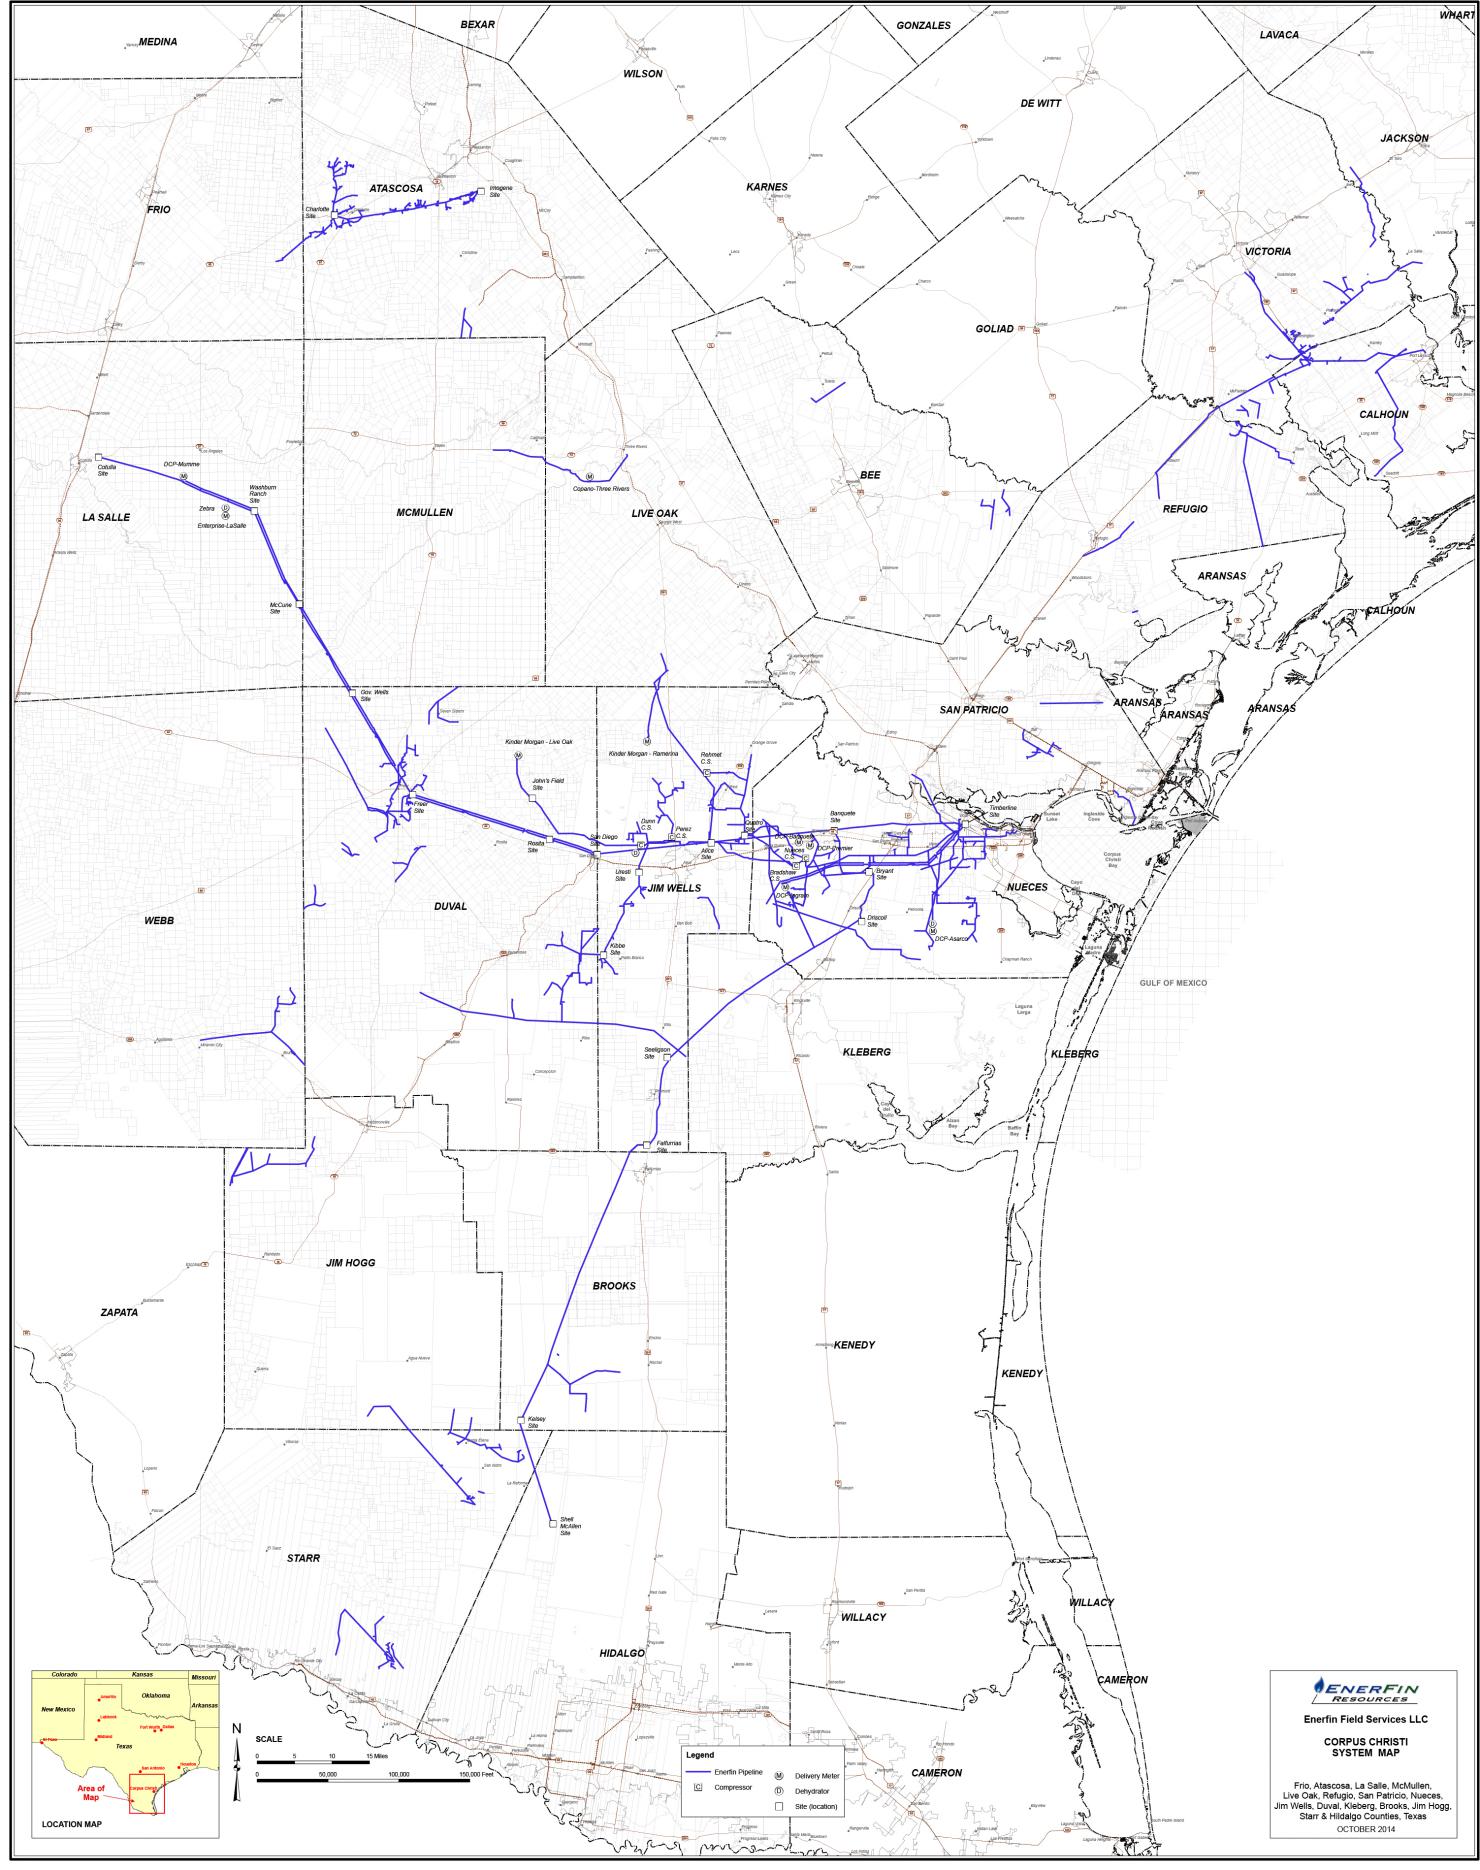 Map of Southeast Texas and Louisiana